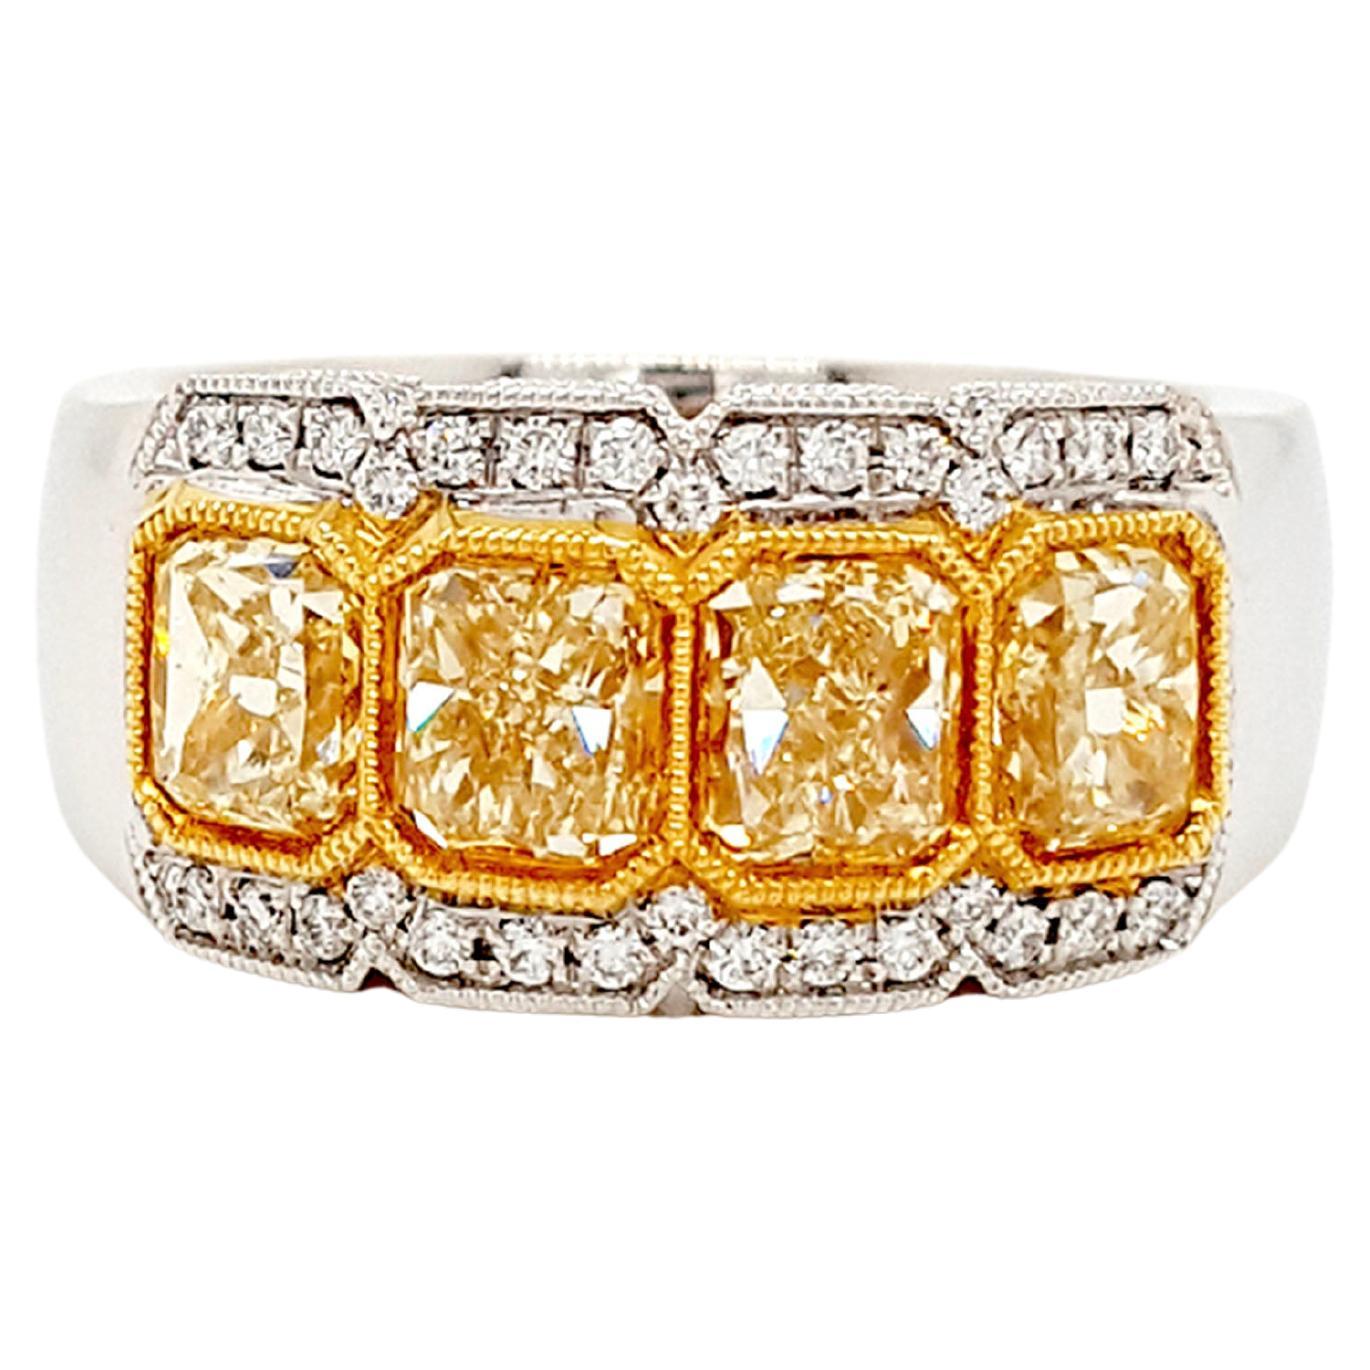 2.38 Carat Yellow Radiant Cut Four-Stone Diamond Ring in 18 Karat Gold.